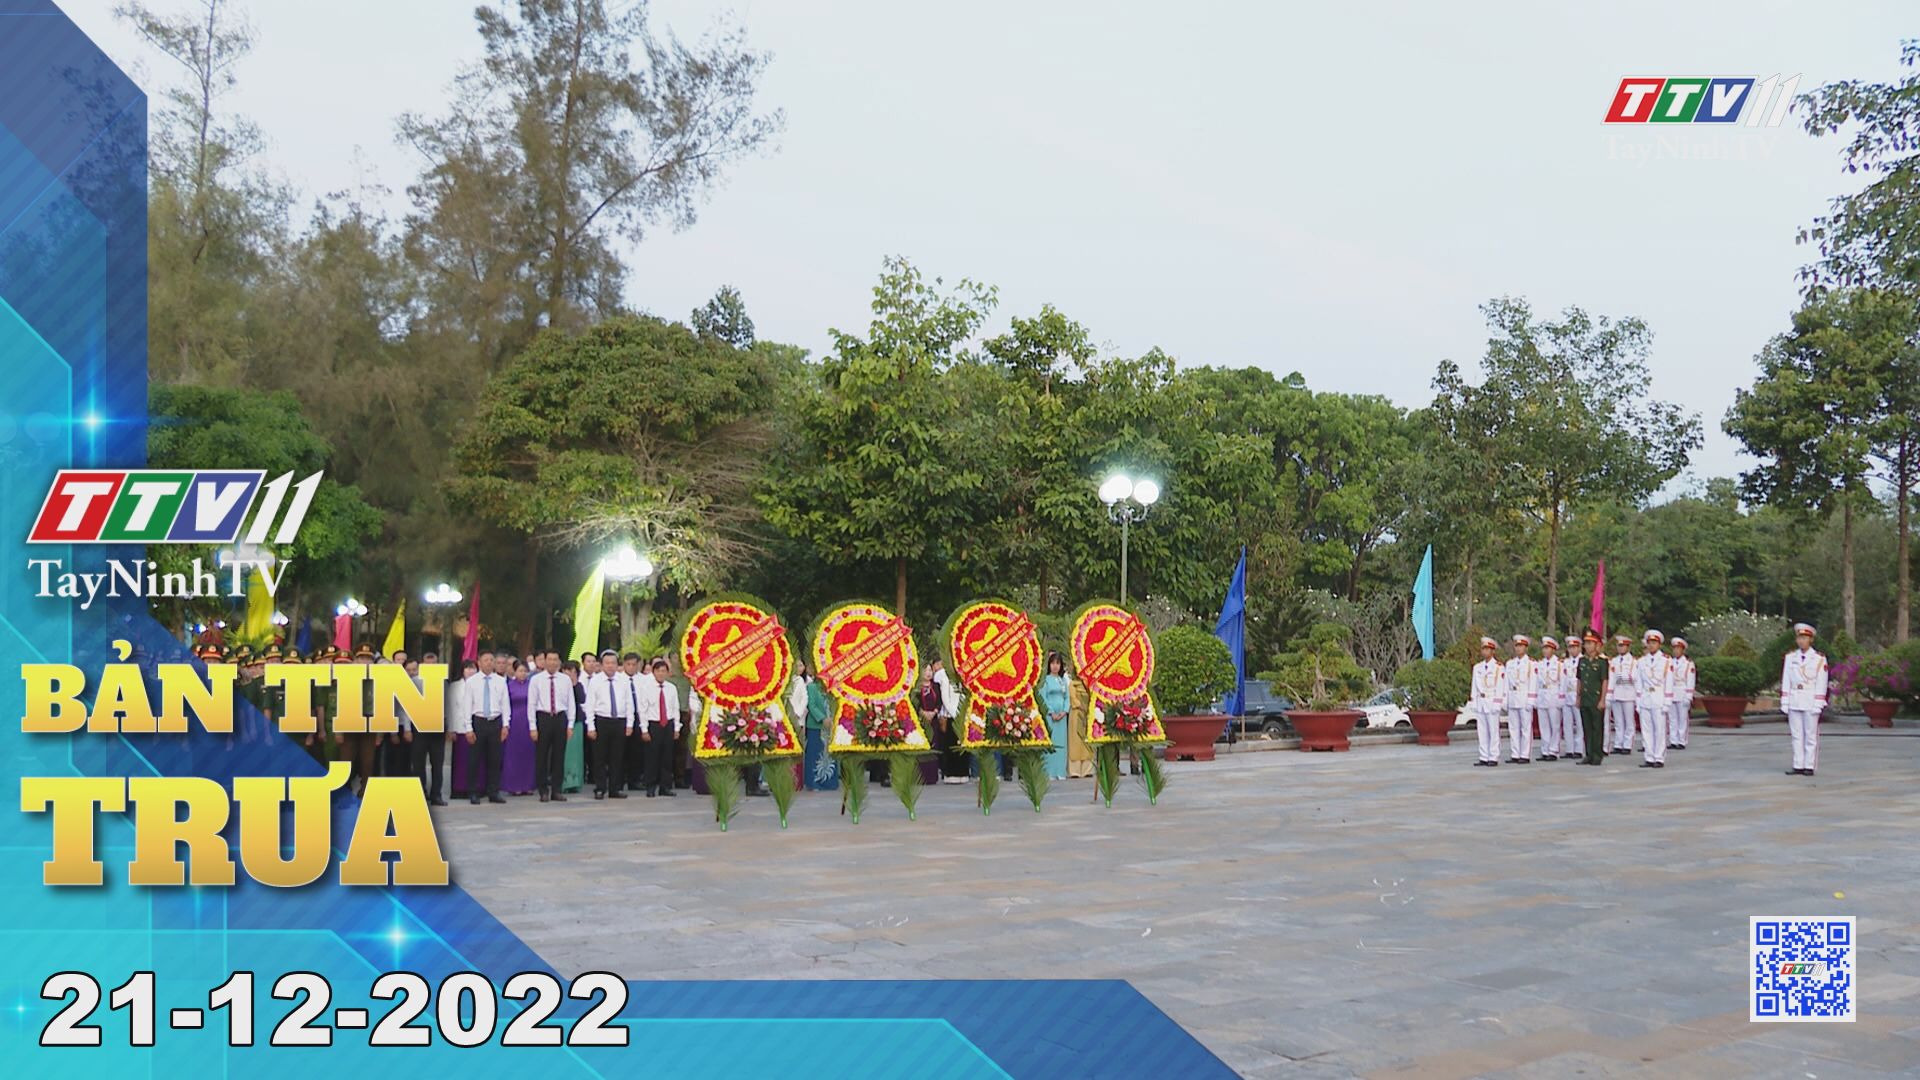 Bản tin trưa 21-12-2022 | Tin tức hôm nay | TayNinhTV